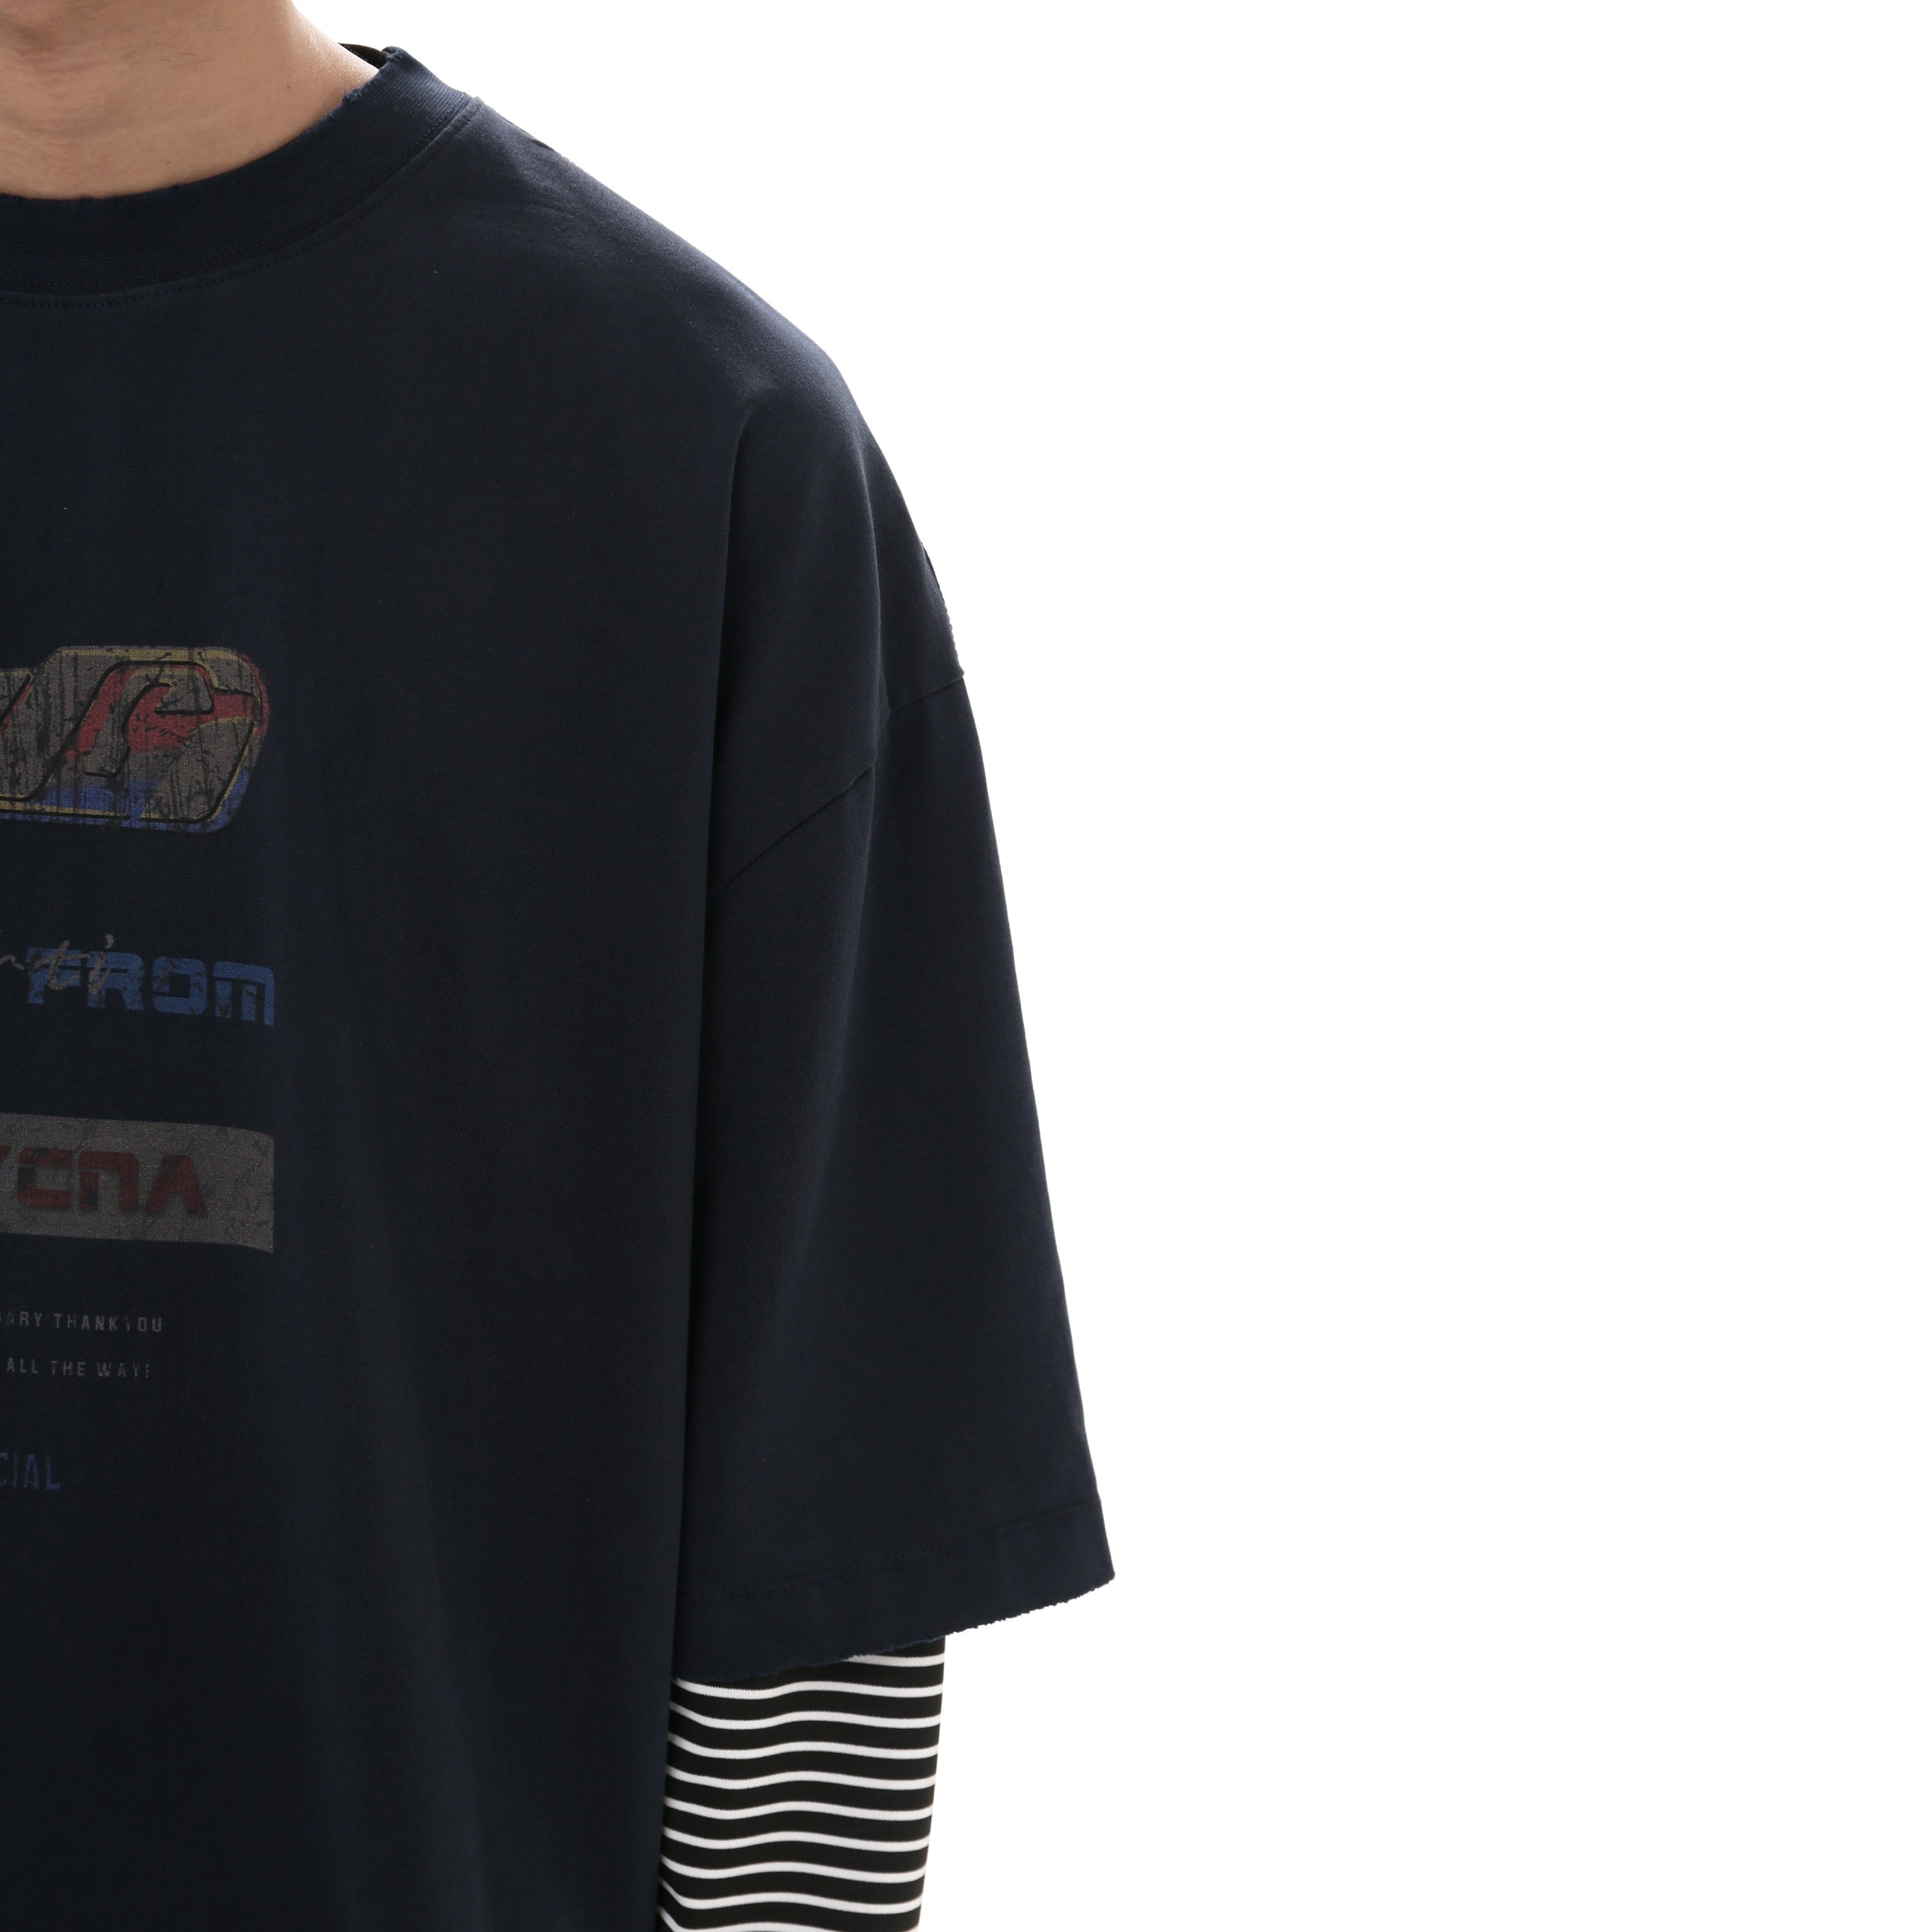 Retro Distressed Print Loose T-Shirt GB7018